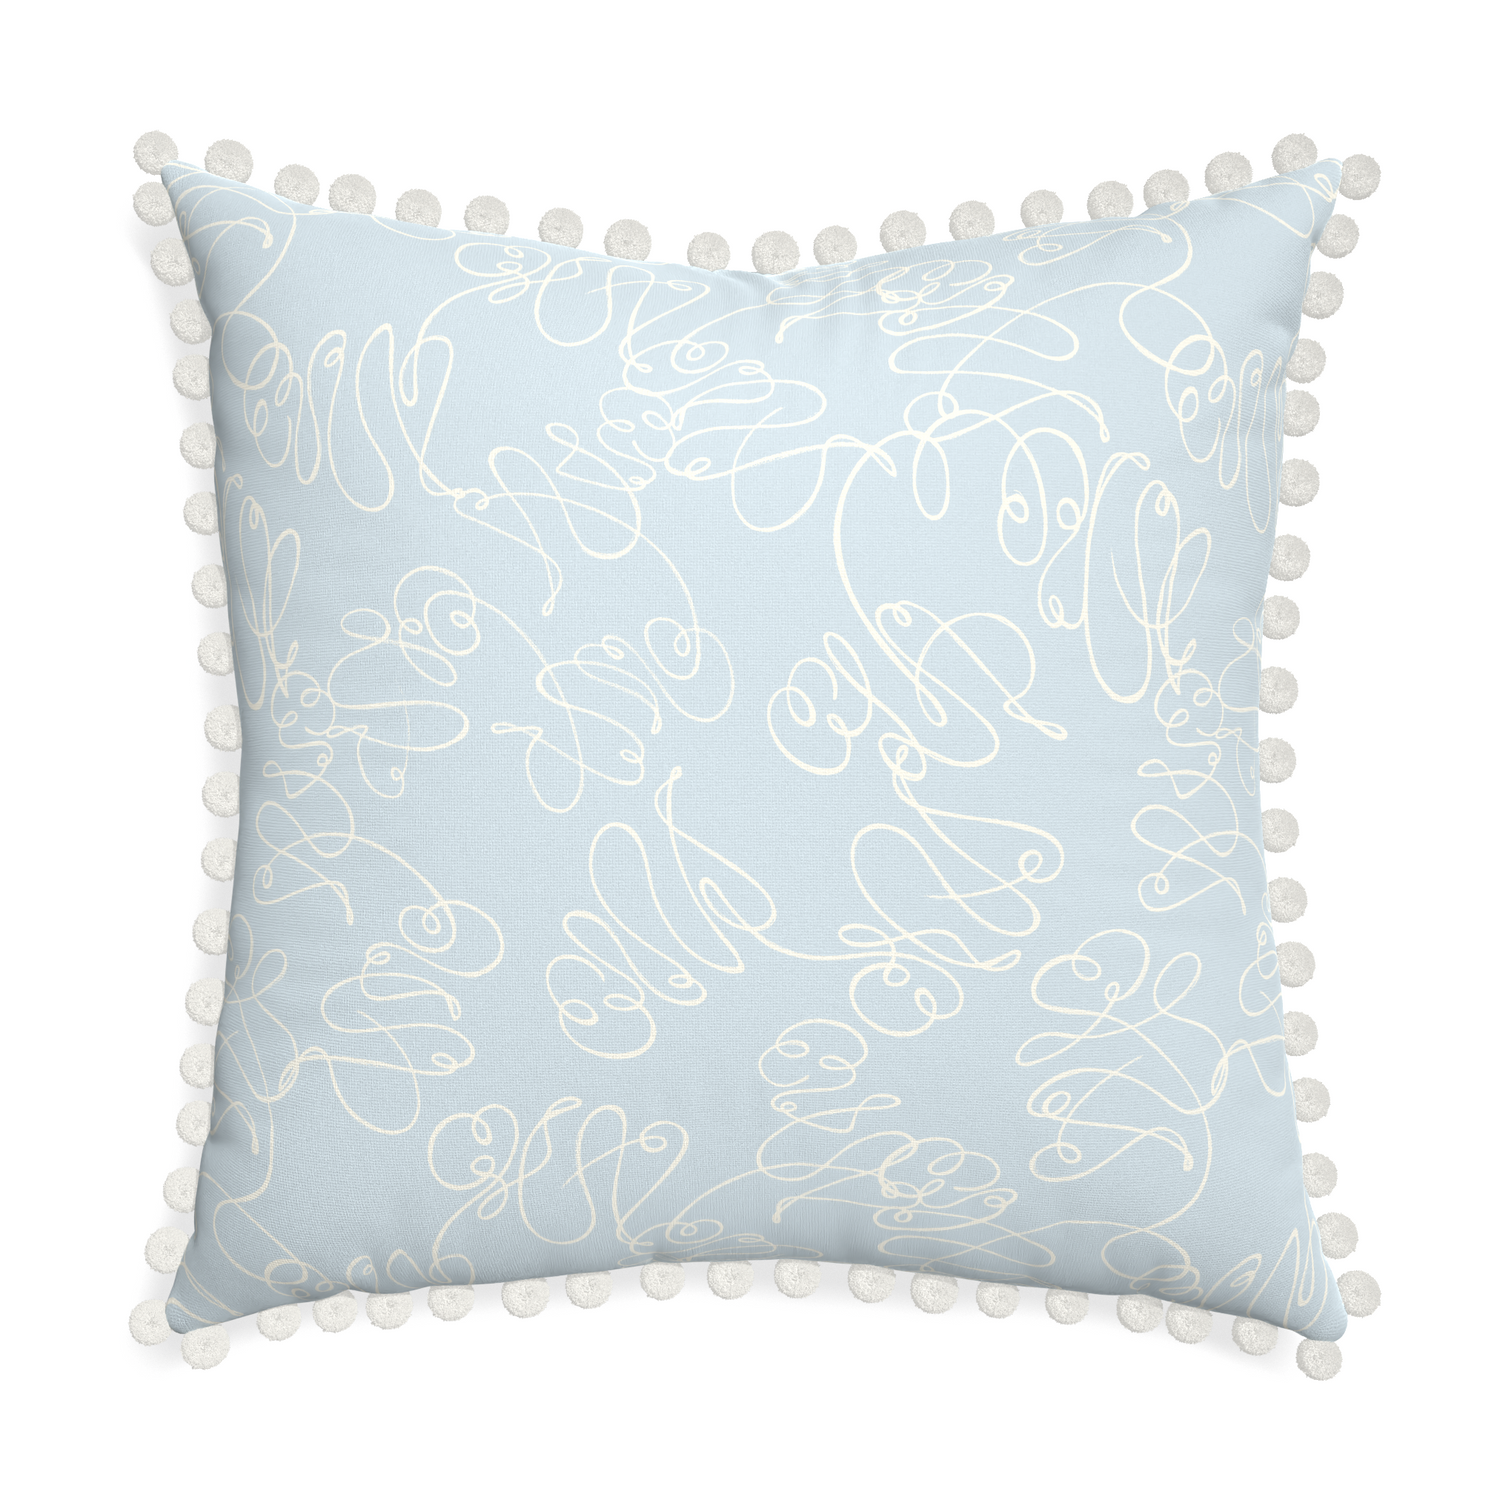 Euro-sham mirabella custom pillow with snow pom pom on white background